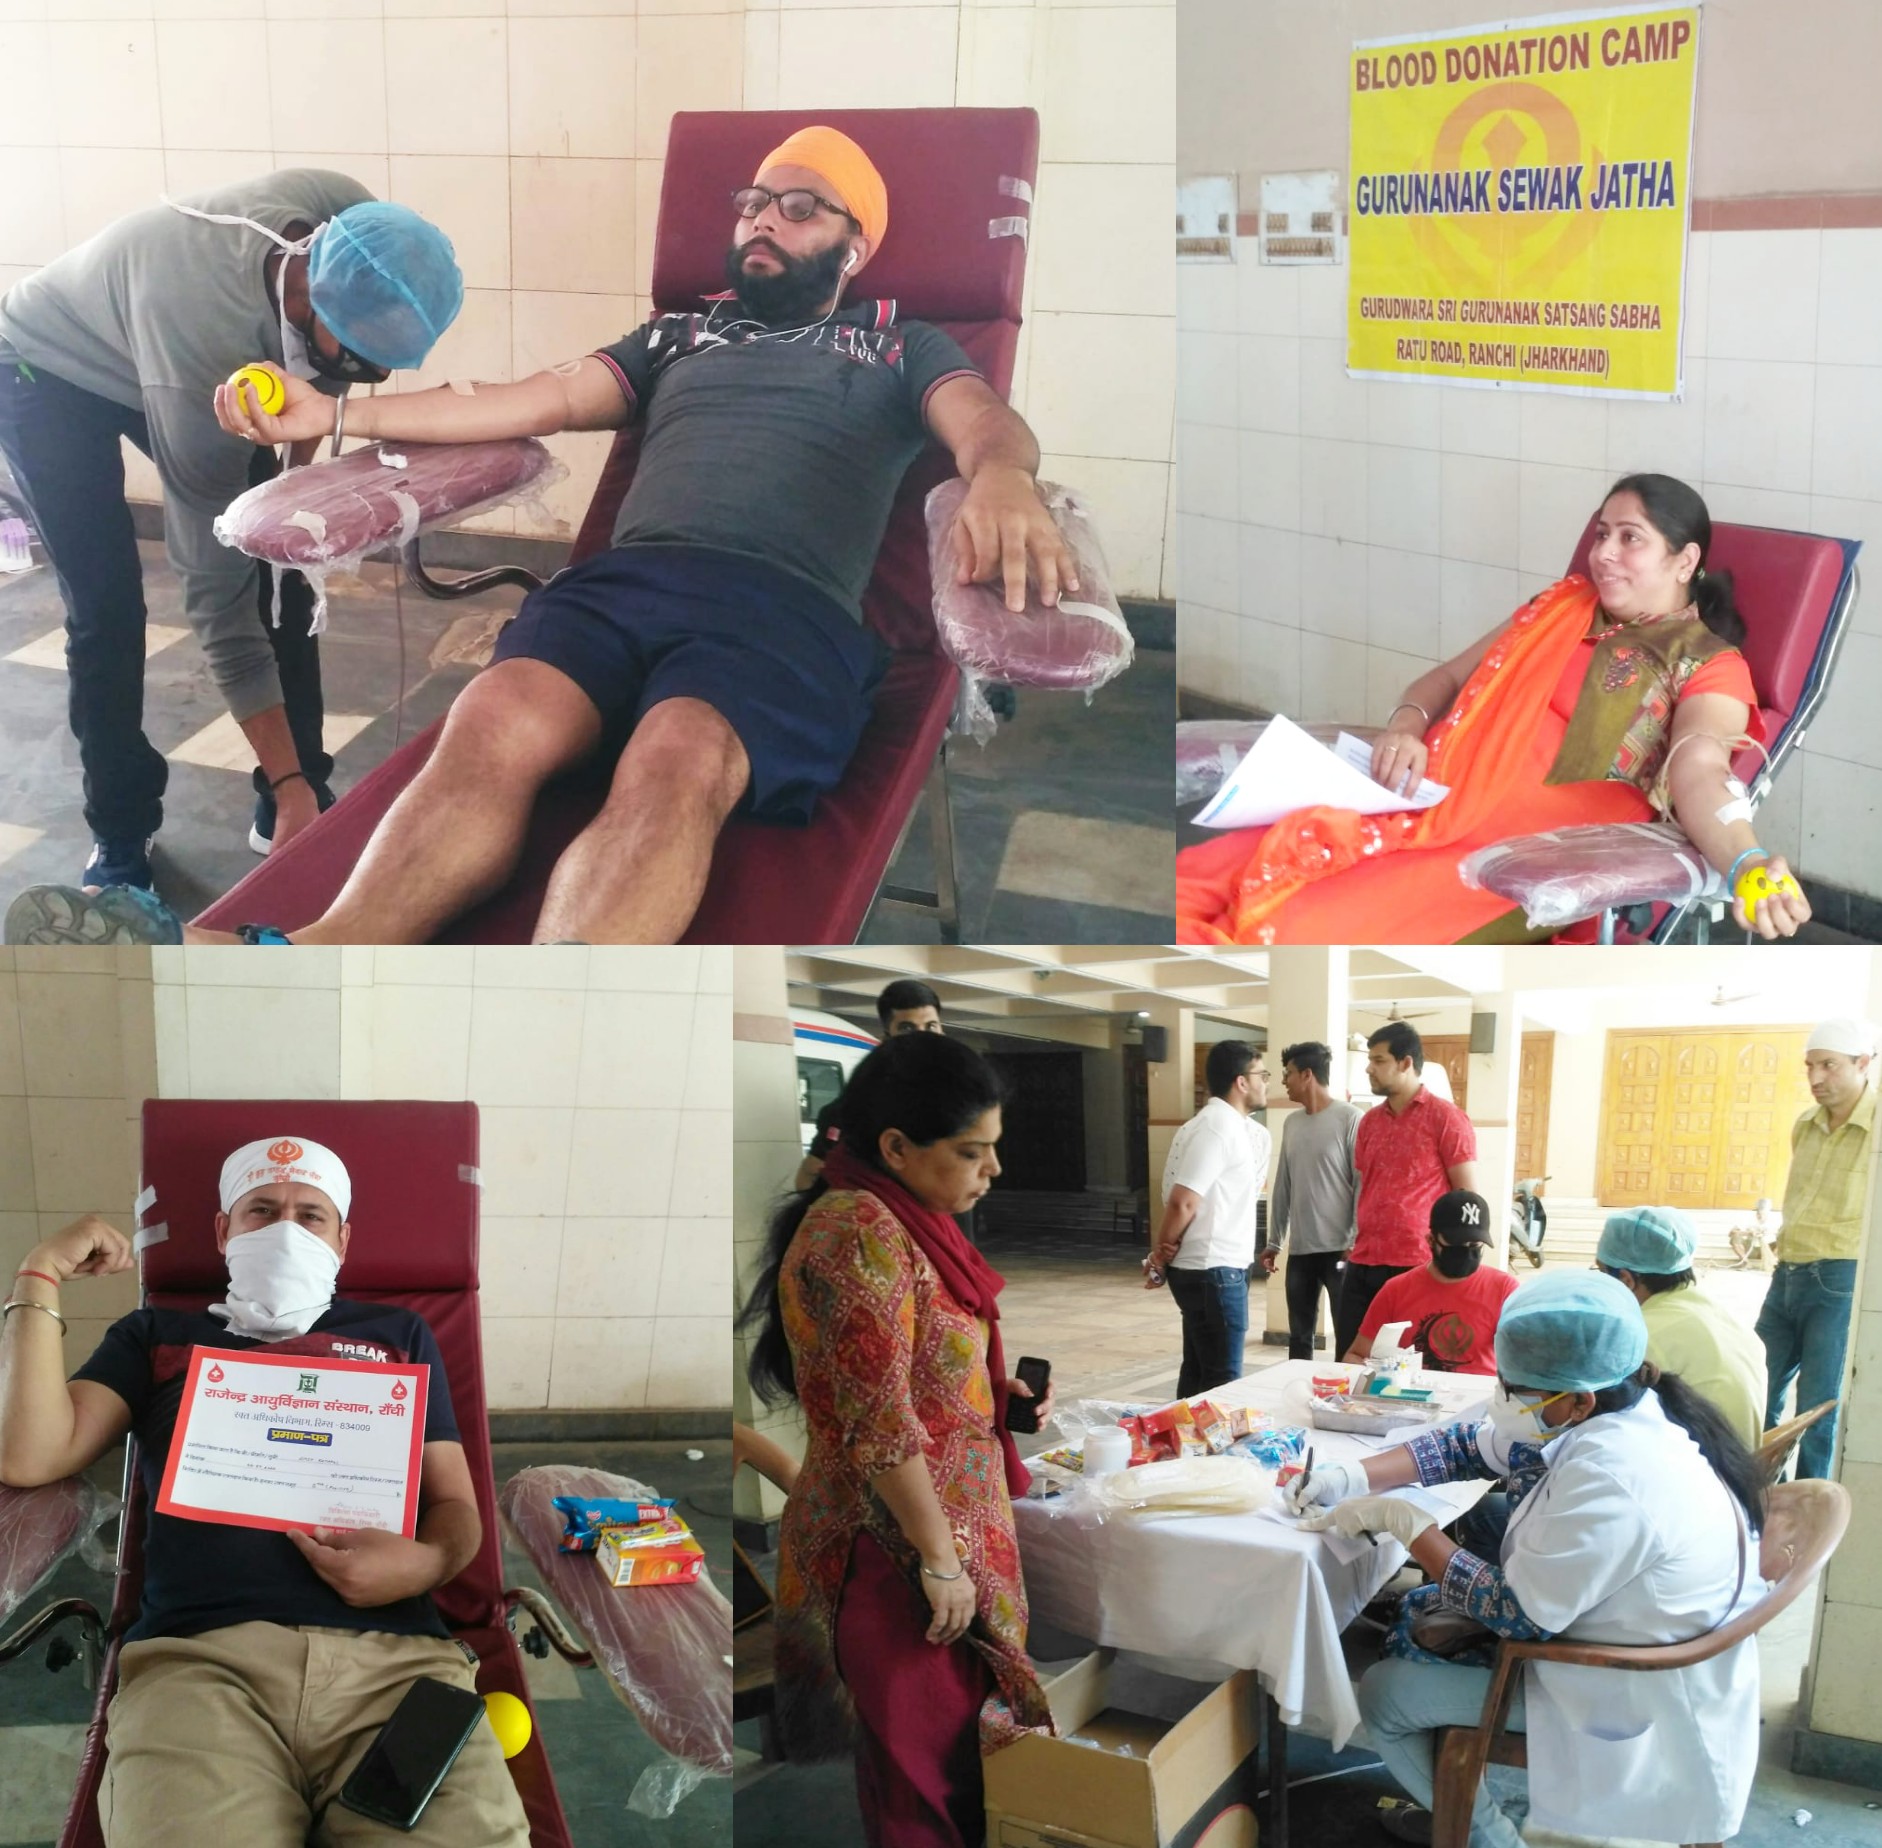 Blood donation camp by gurudwara sri guru nanak satsang sabha: 45 people donated their blood : camp will continue tomorrow also